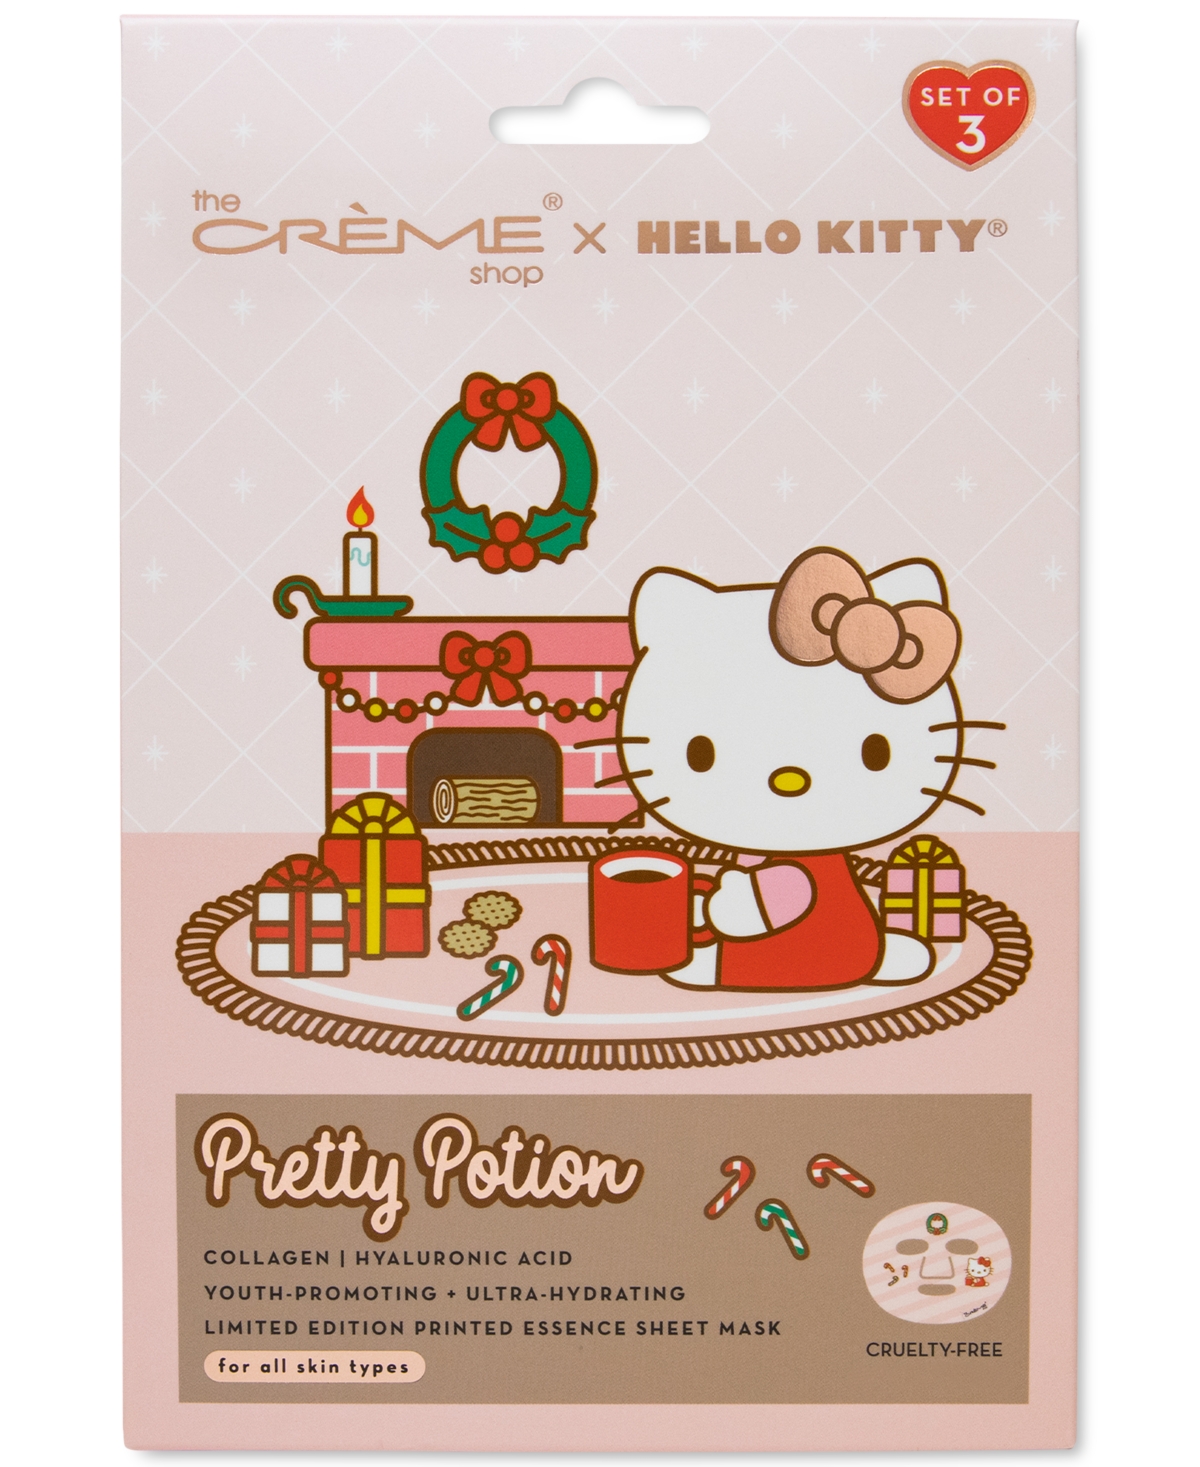 x Hello Kitty Pretty Potion Printed Essence Sheet Mask, 3-Pk.